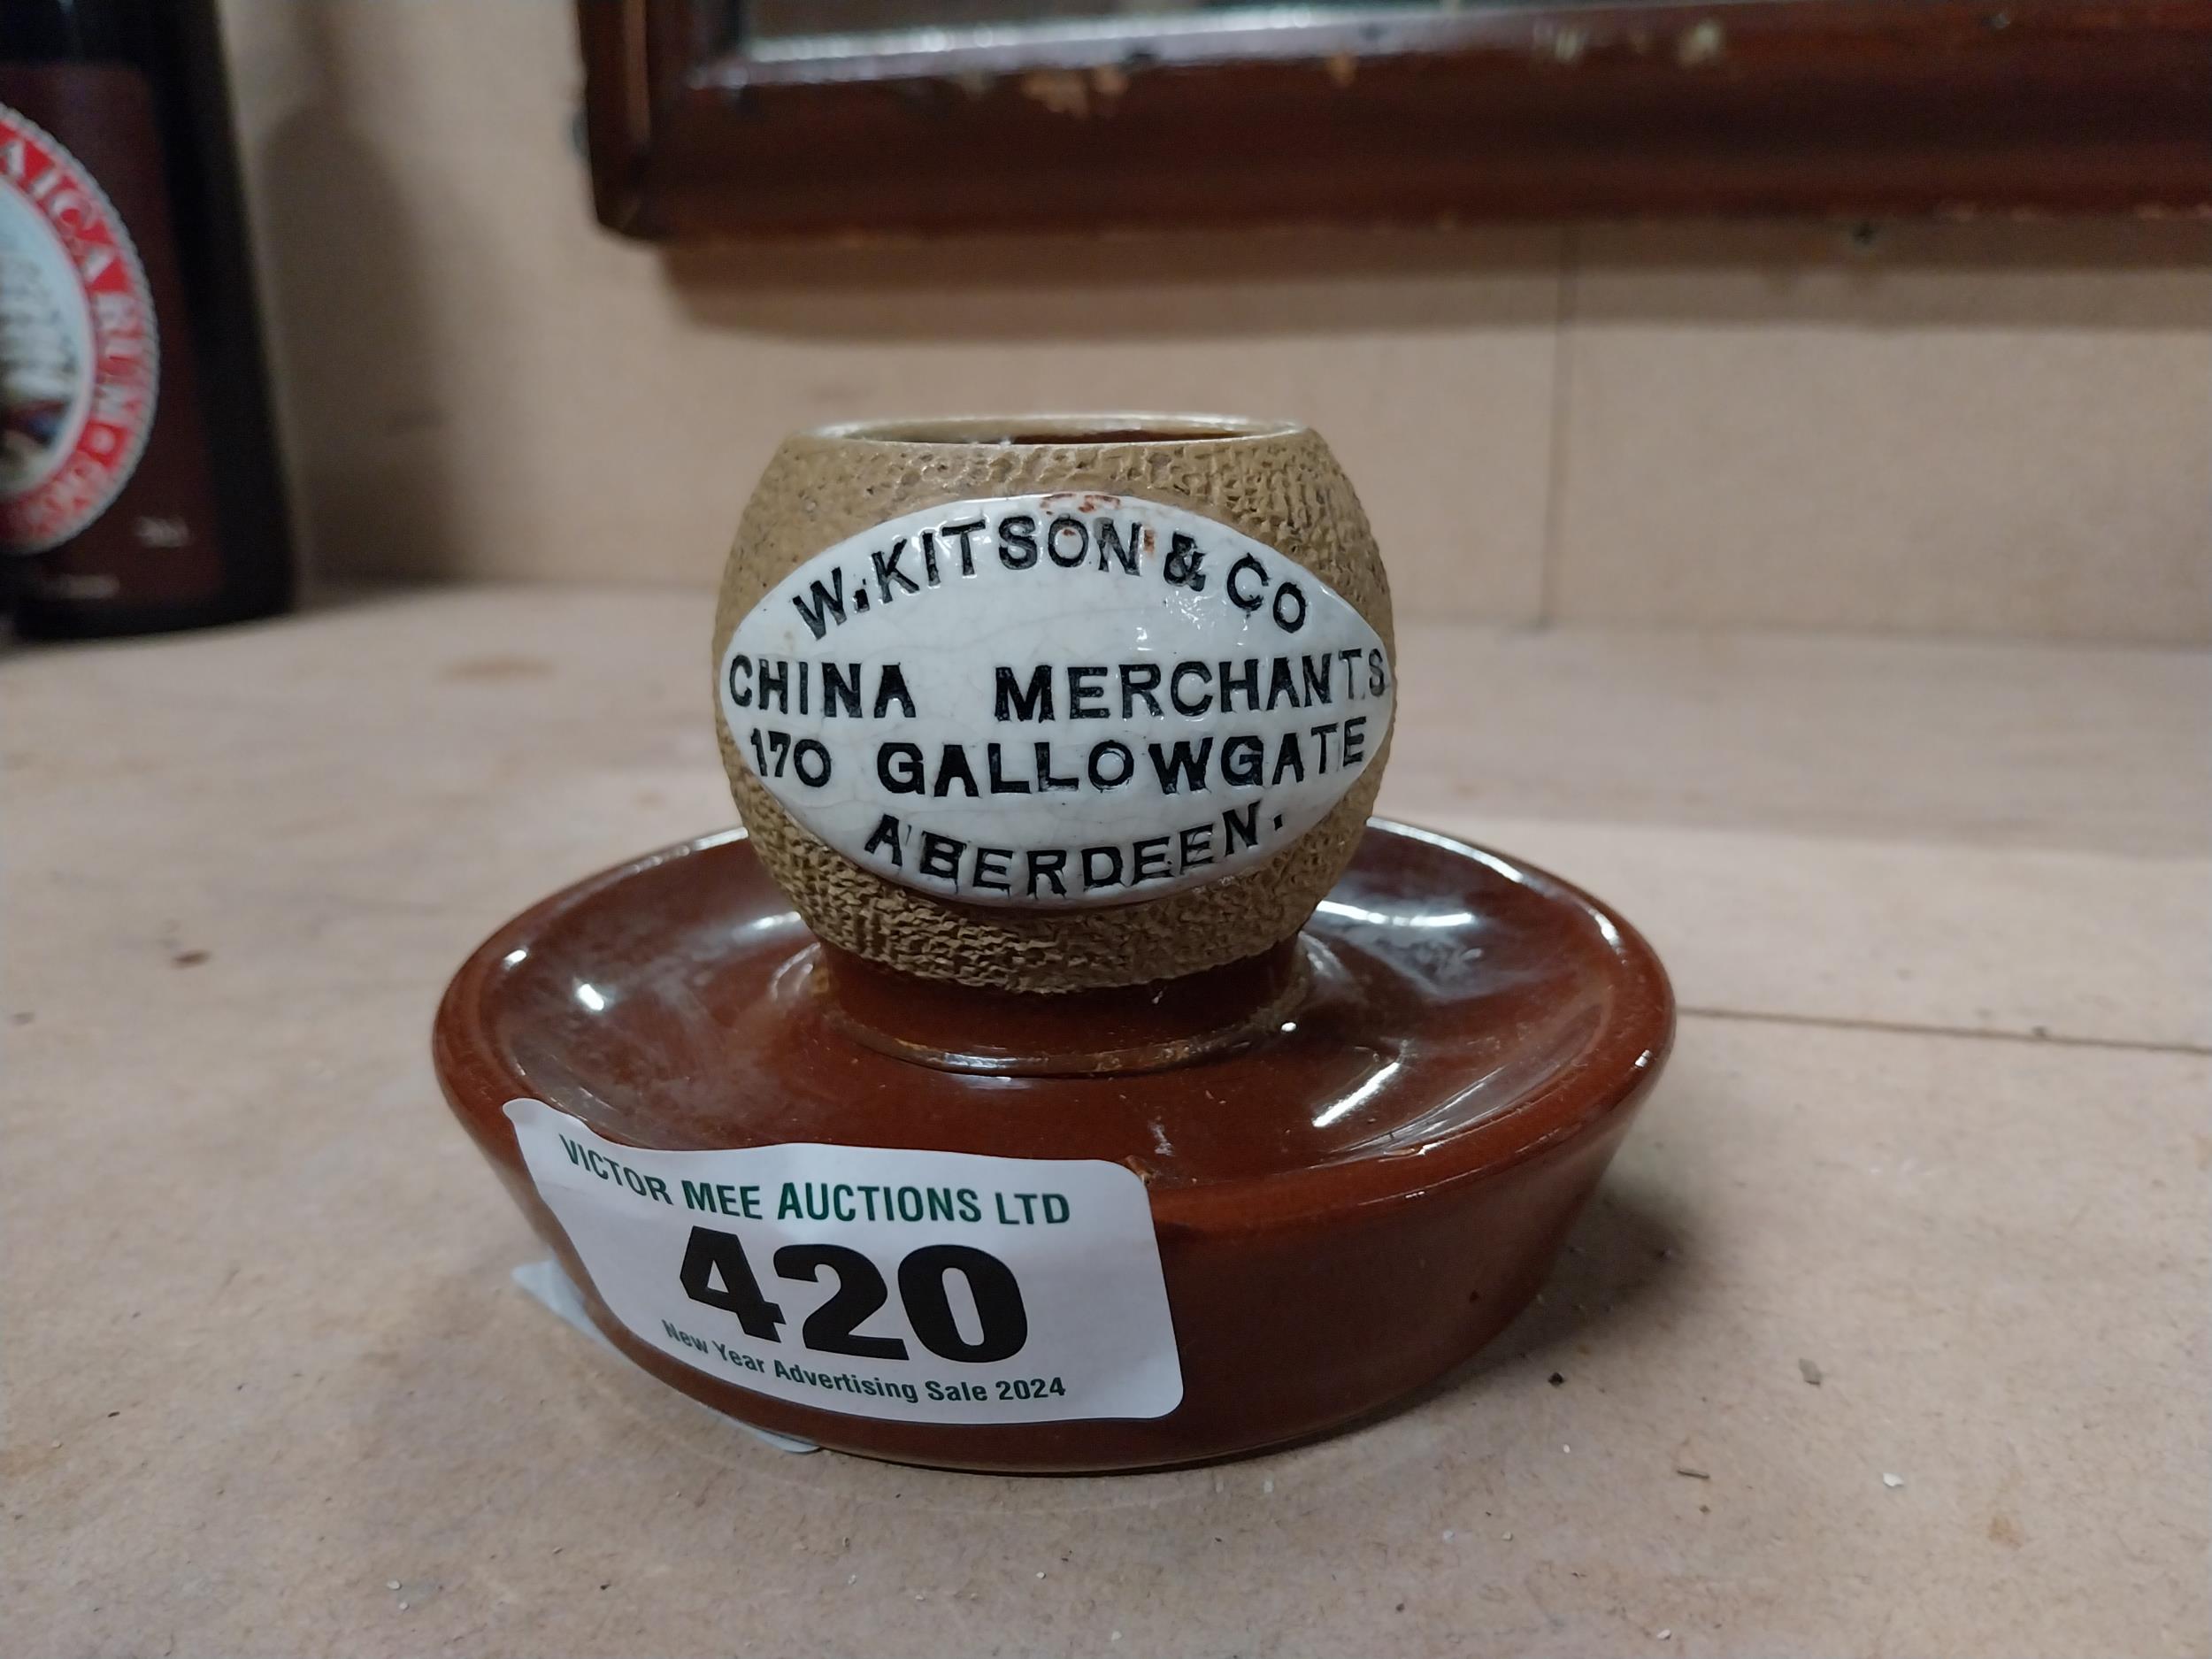 W Kitson and Co China Merchants Gallowgate Aberdeen ceramic match strike. {8 cm H x 10 cm Dia.} - Image 3 of 7